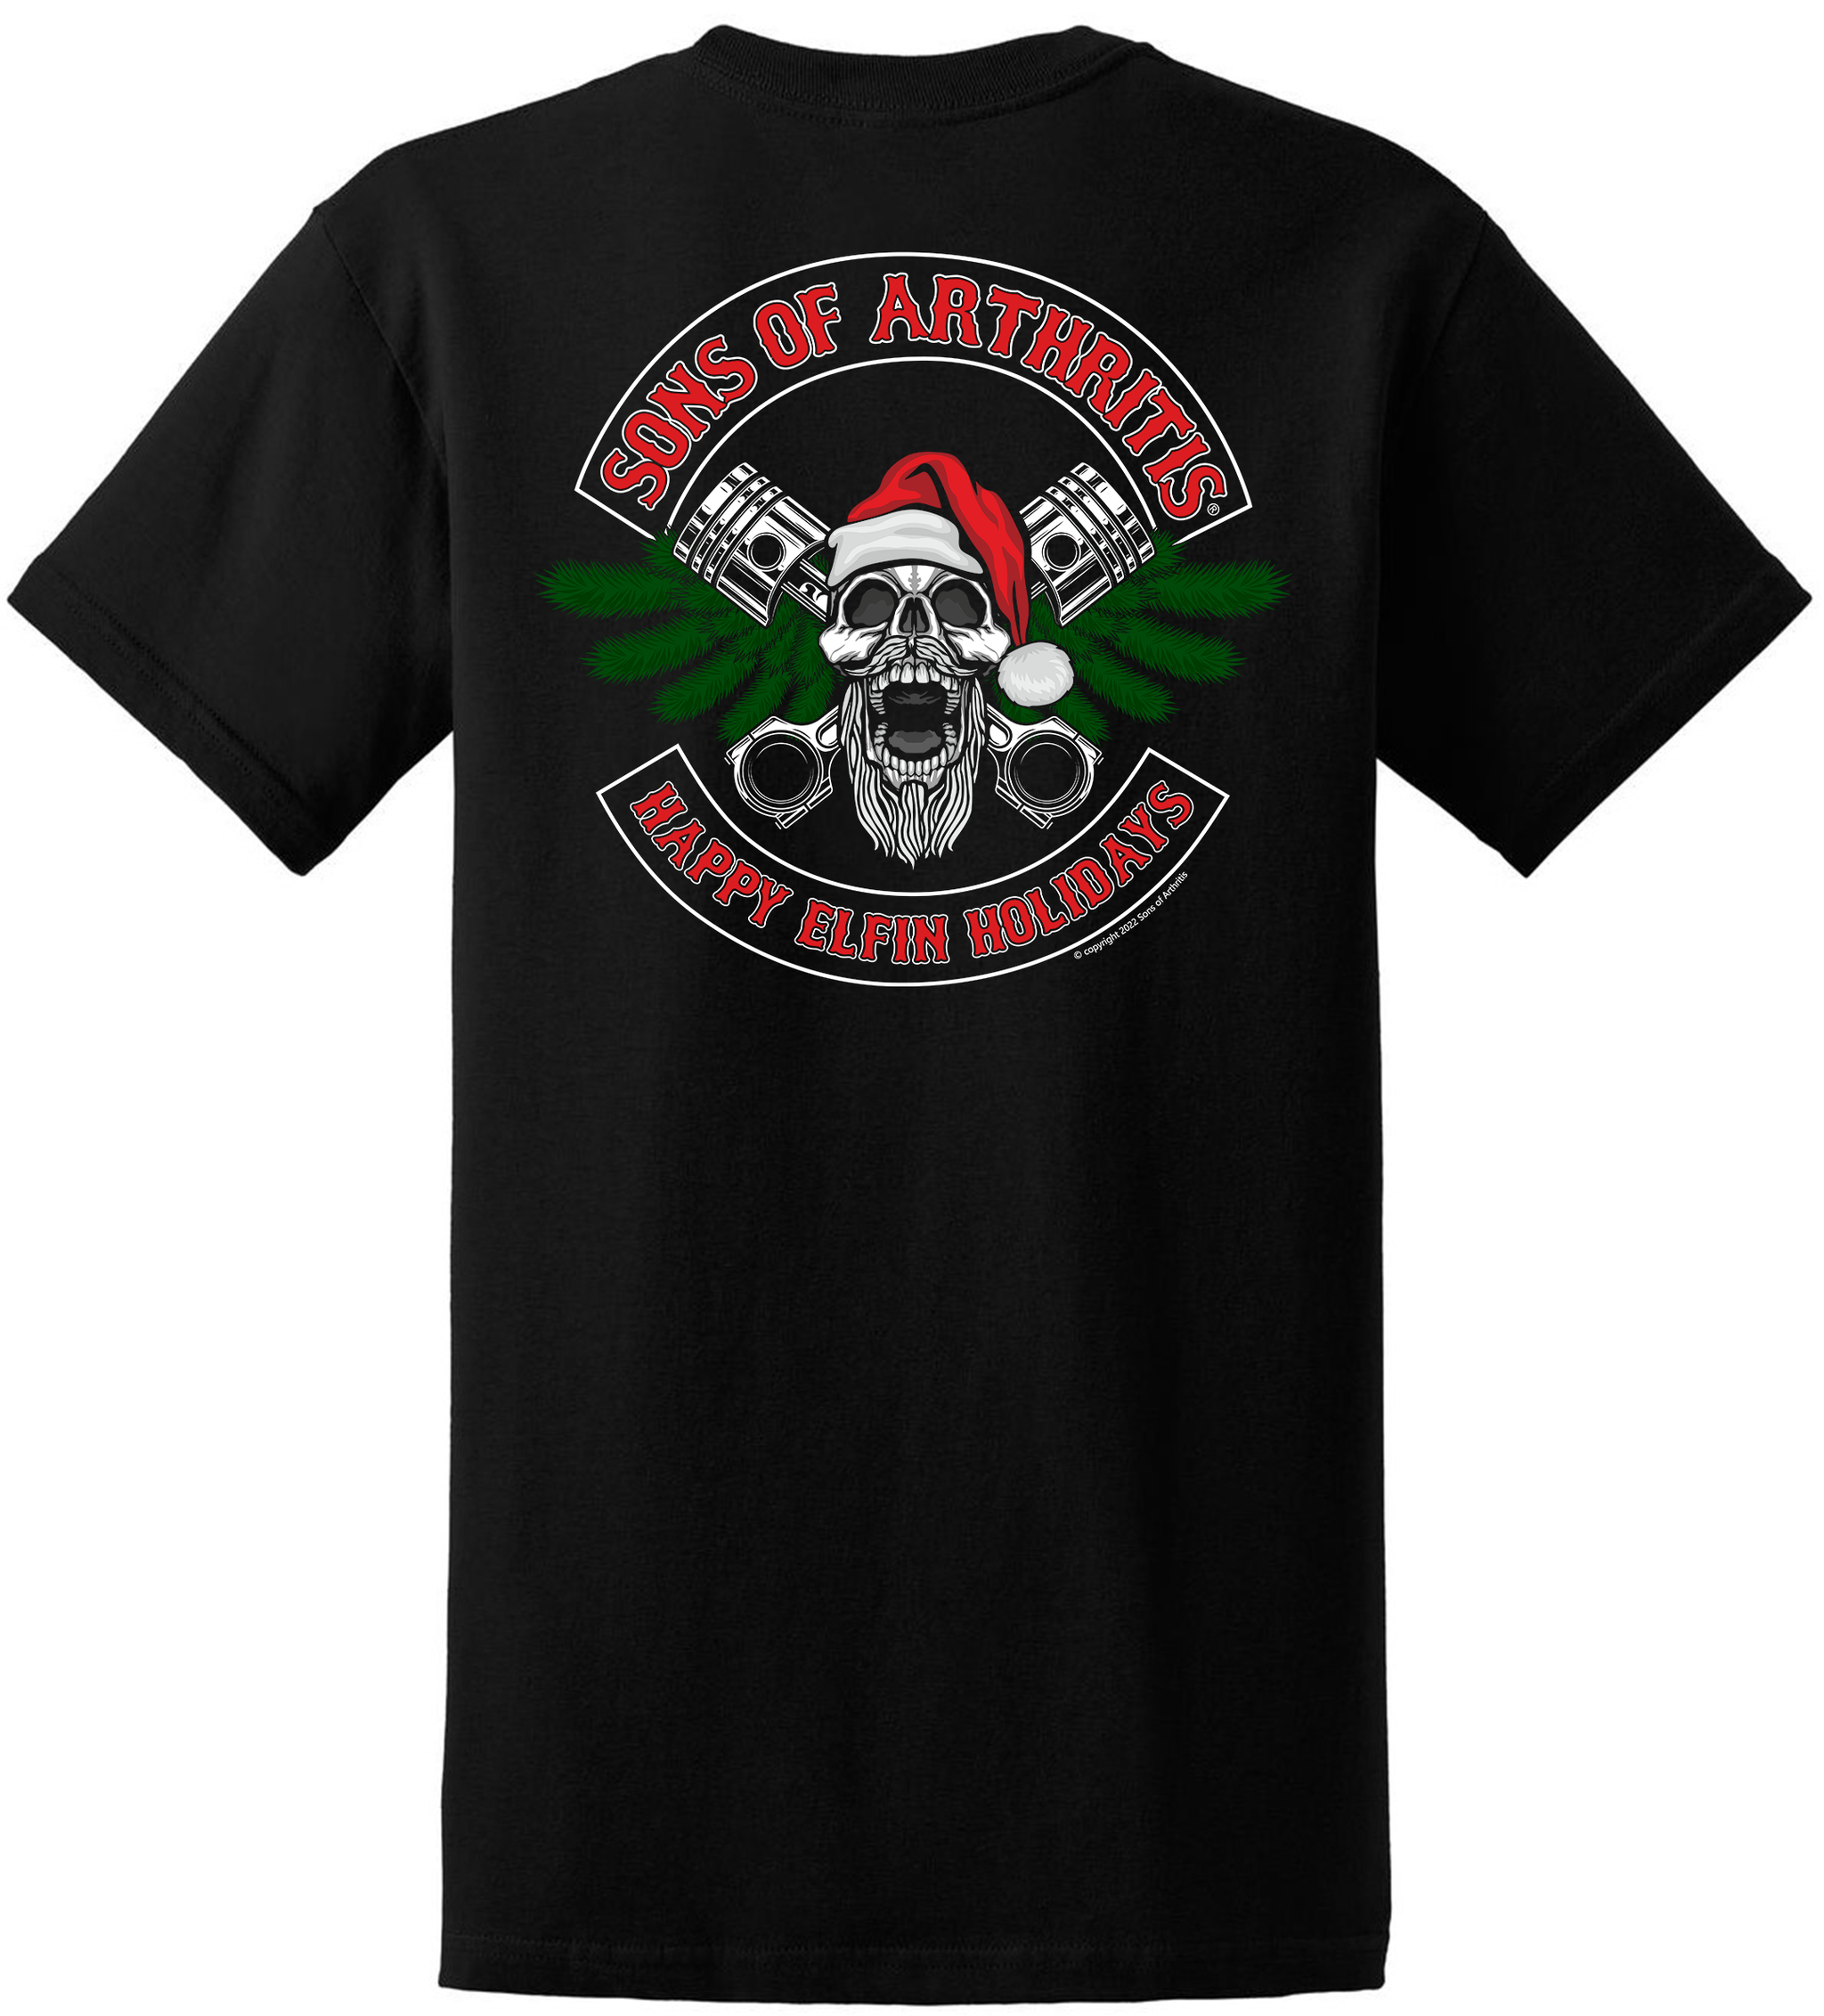 Arthritis Sons - T-Shirt Happy of - Holidays Elfin Black